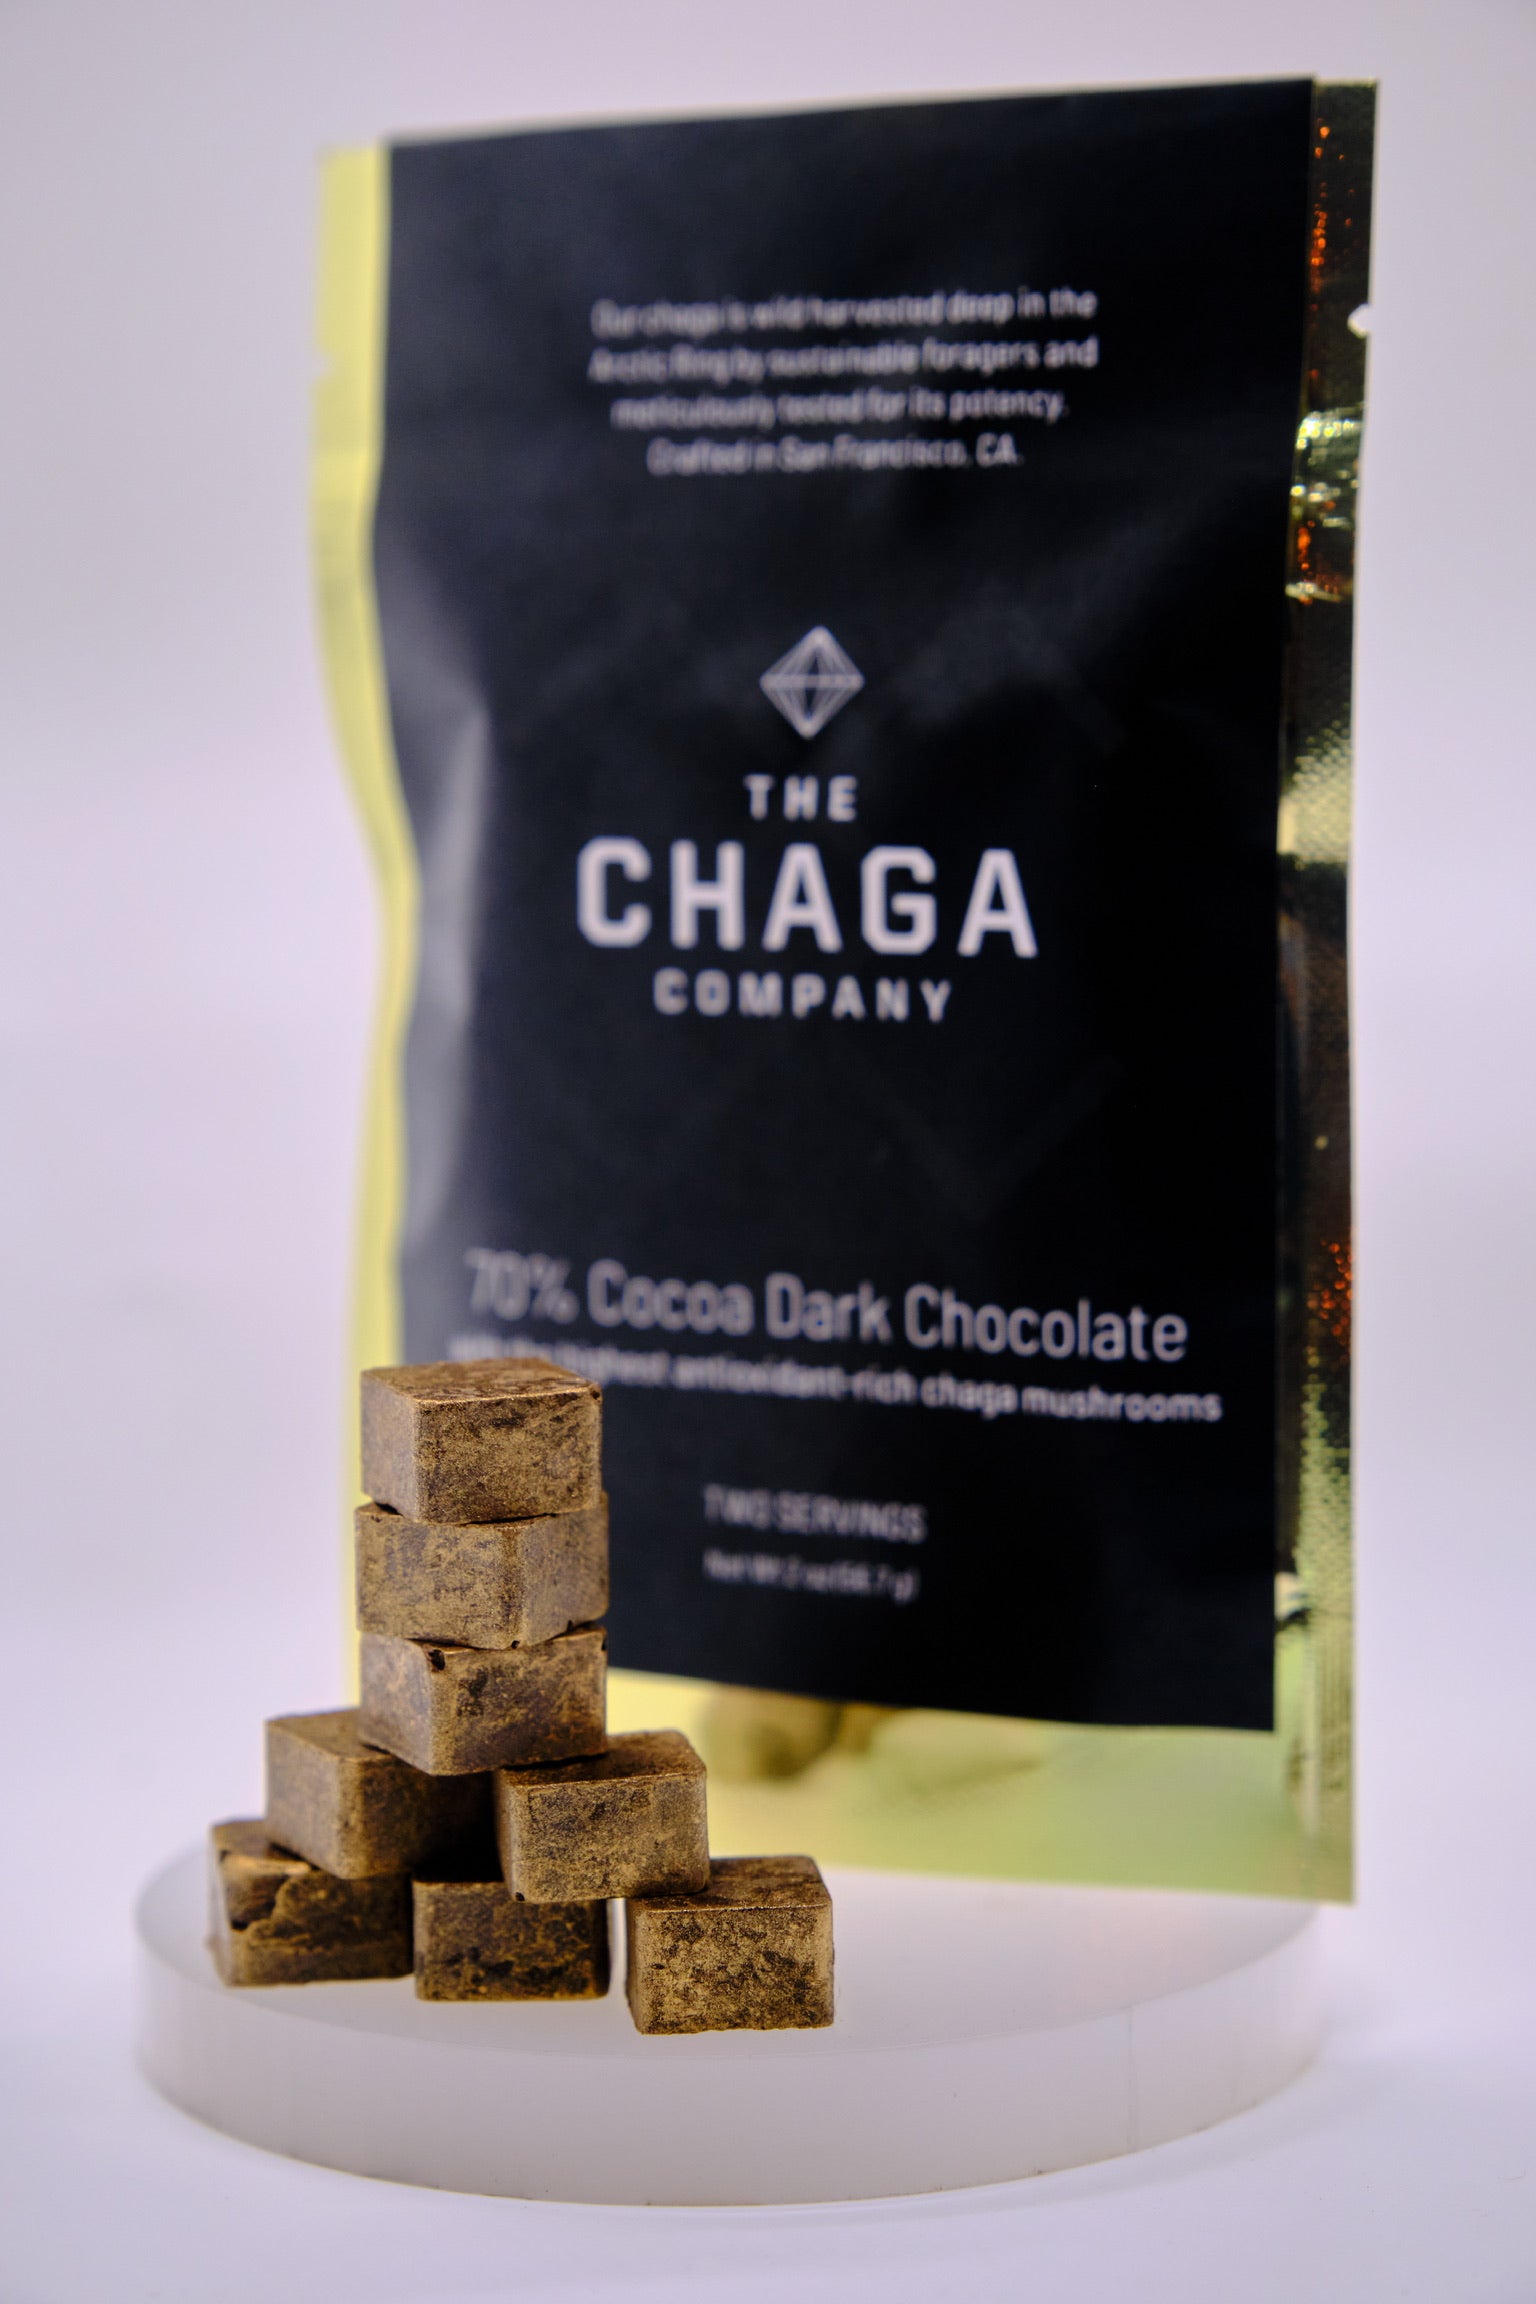 The Chaga Company GOLD-STANDARD CHAGA CHOCOLATE INGOT (COCOA DARK CHOCOLATE BAR)